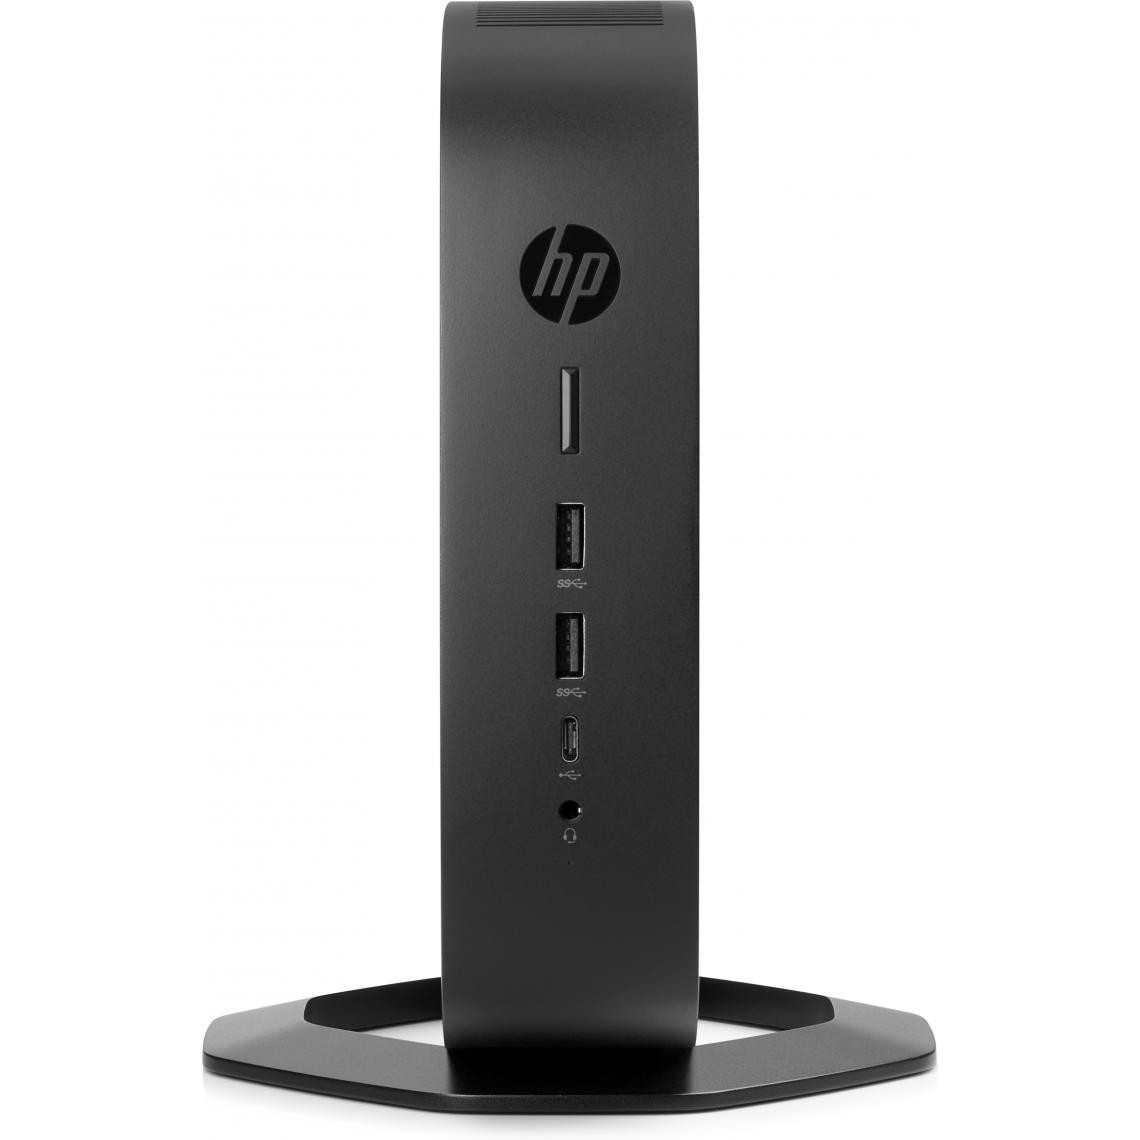 Hp - HP t740 3,25 GHz Windows 10 IoT Enterprise 1,33 kg Noir V1756B - PC Fixe